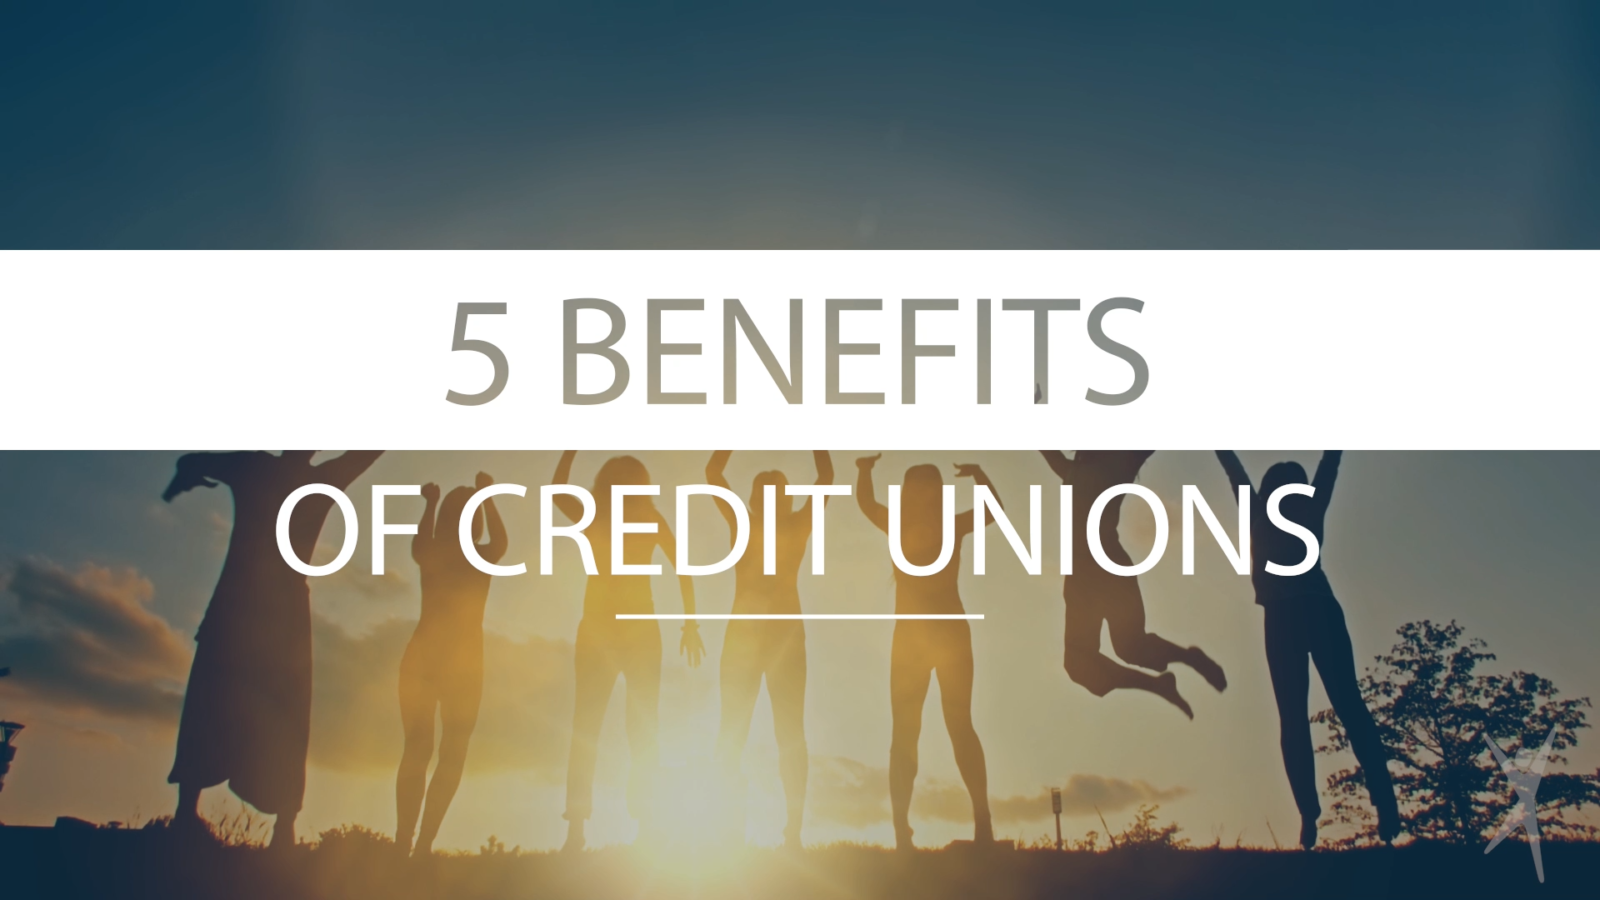 5 Benefits of Credit Unions